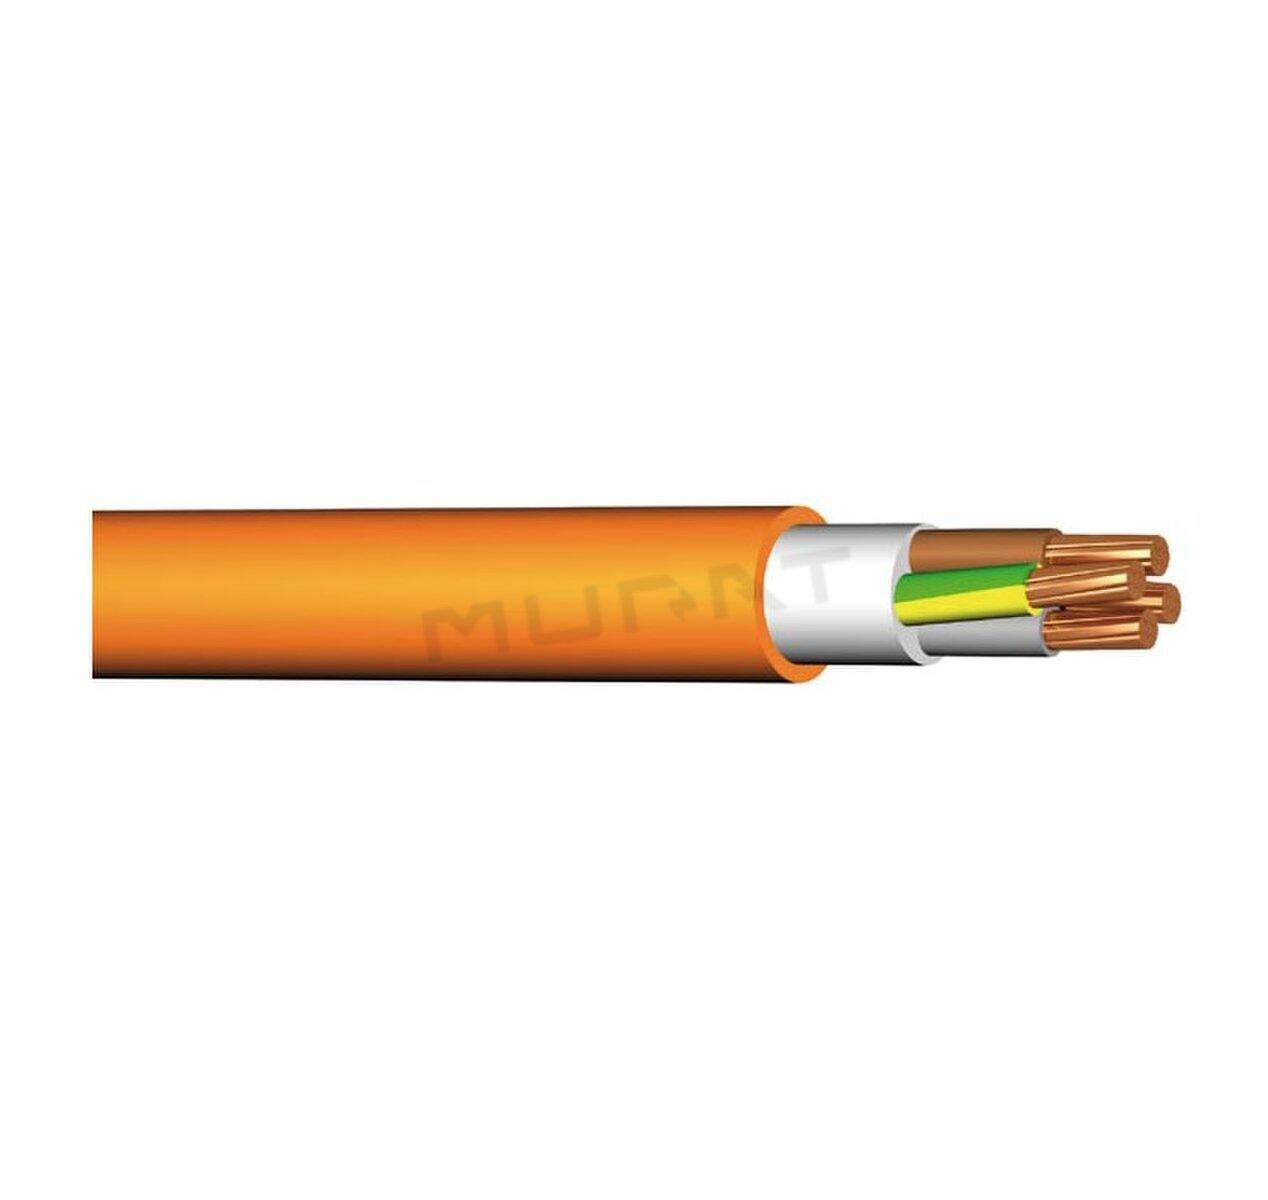 Kábel PRAFlaSafe X-O 2x2,5 mm2 RE B2ca s1d1a1